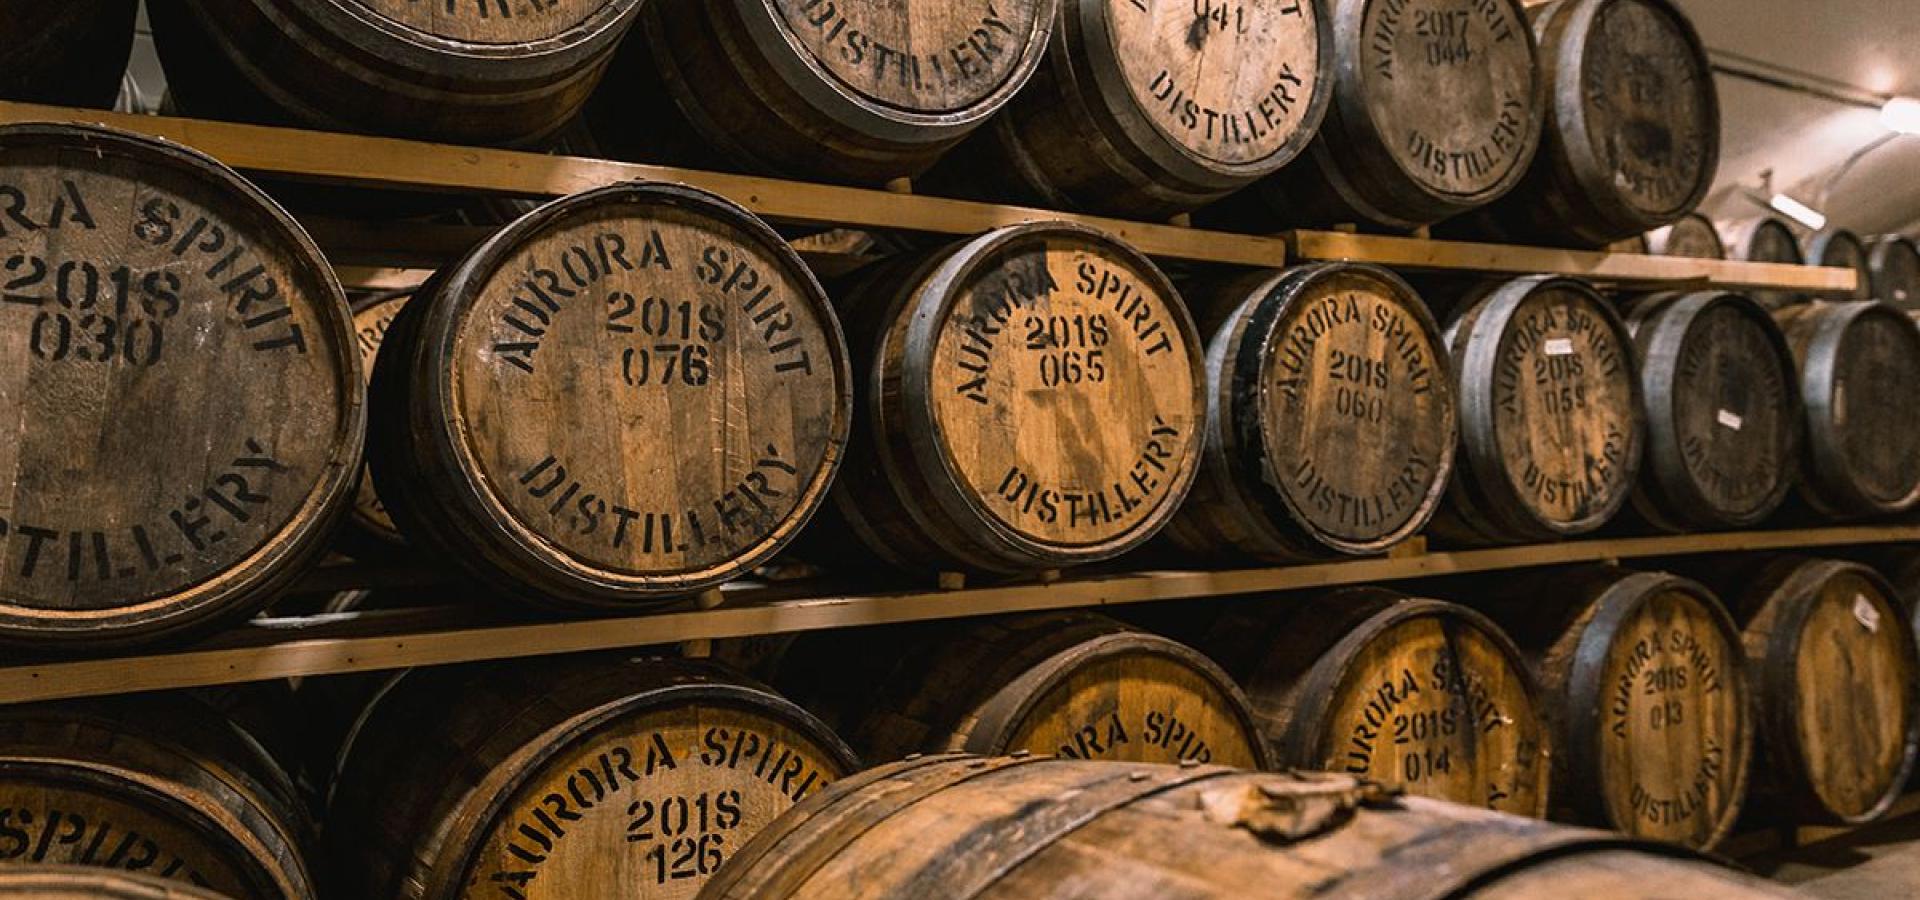 Besøk Aurora Spirit, verdens nordligste whisky destilleri